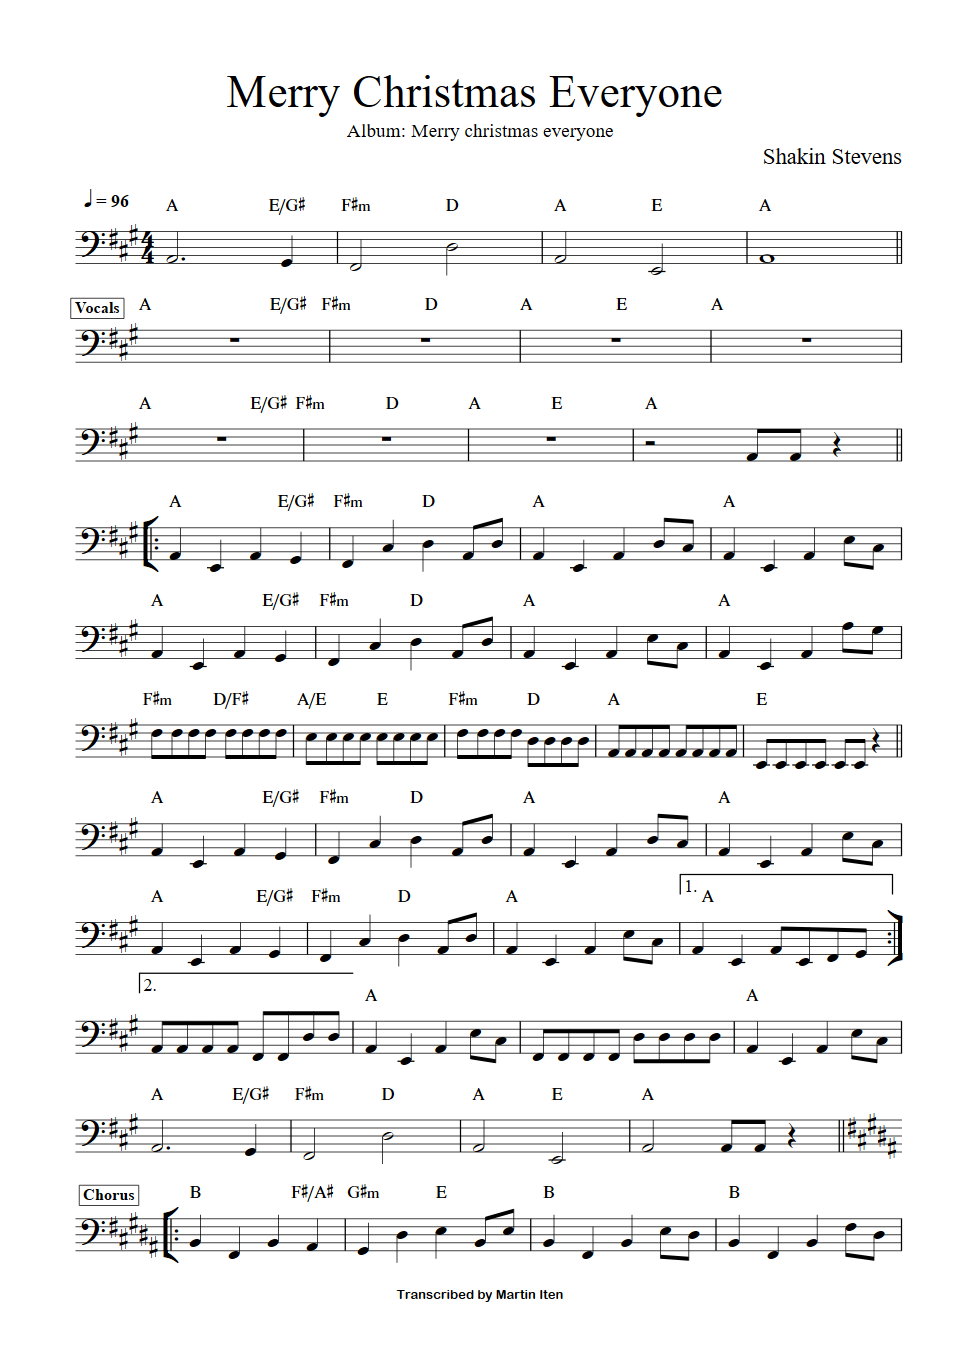 Shaking Stevens Merry Christmas Everyone bass transcription